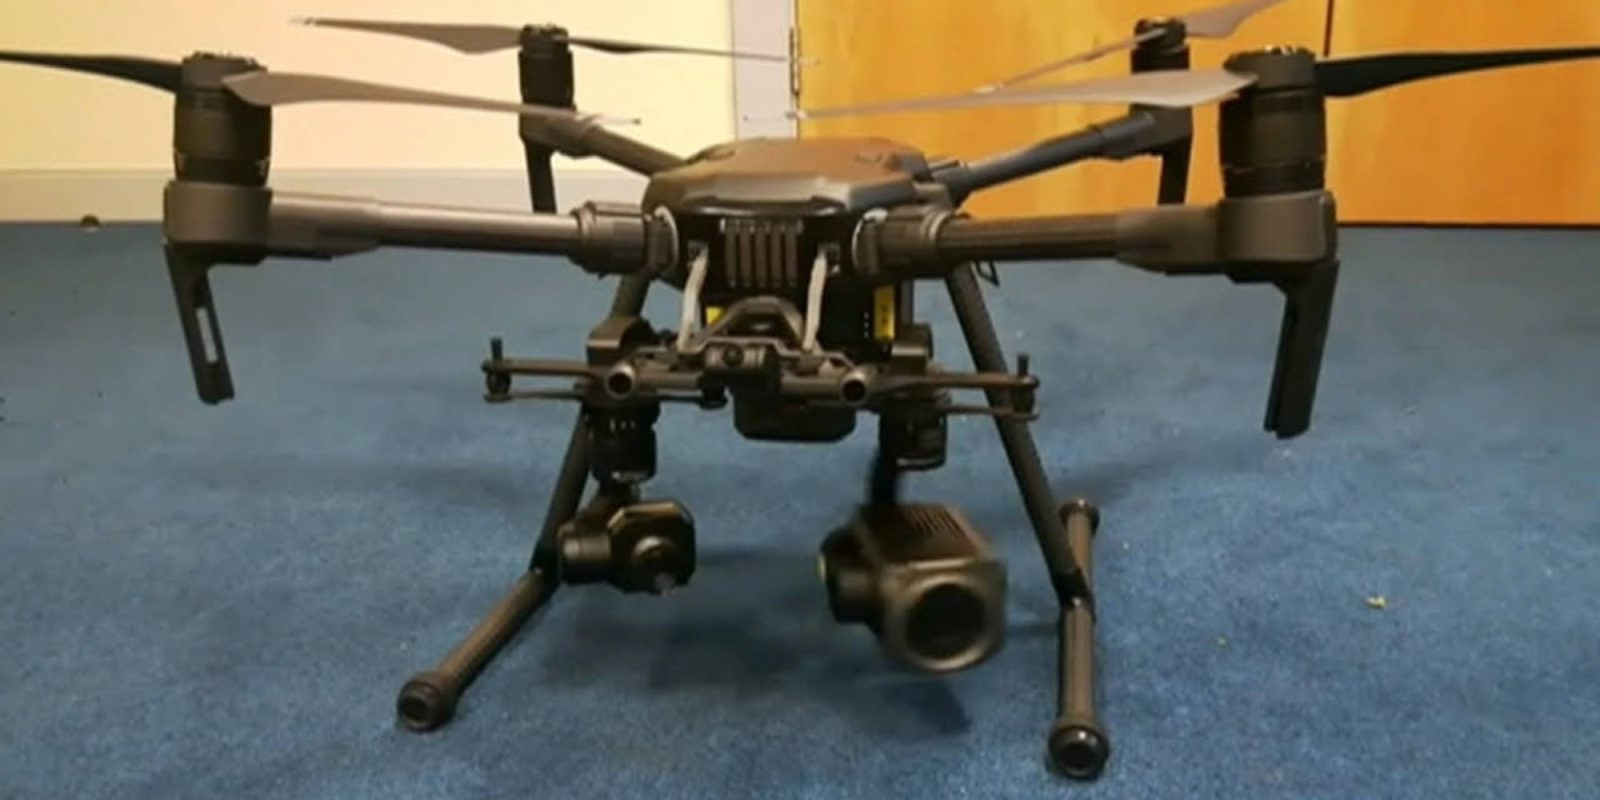 Victorian police drones COVID-19